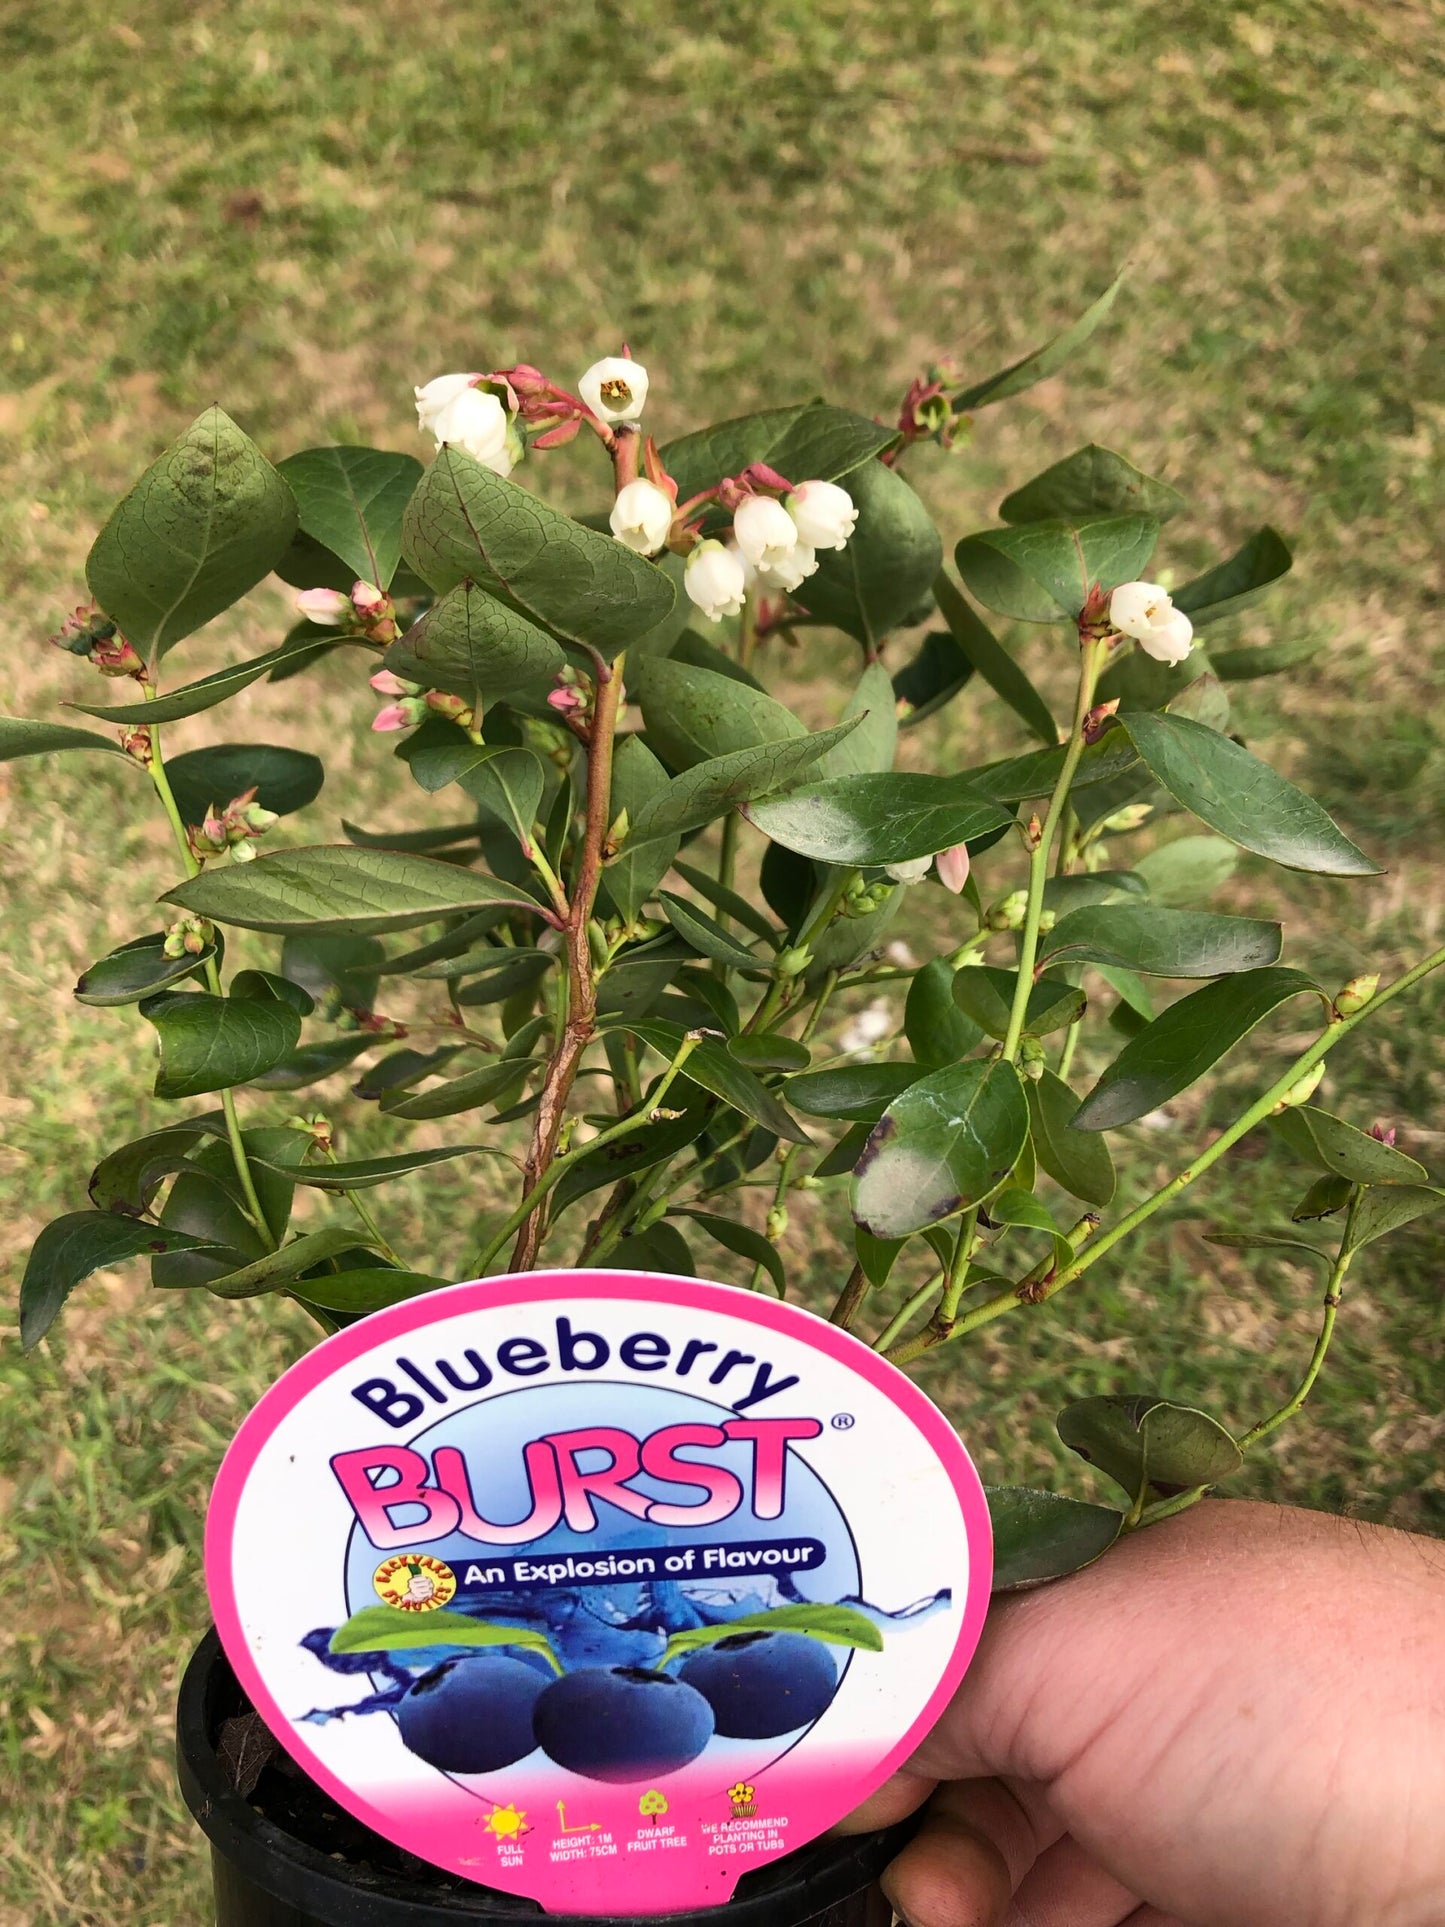 Blueberry Burst